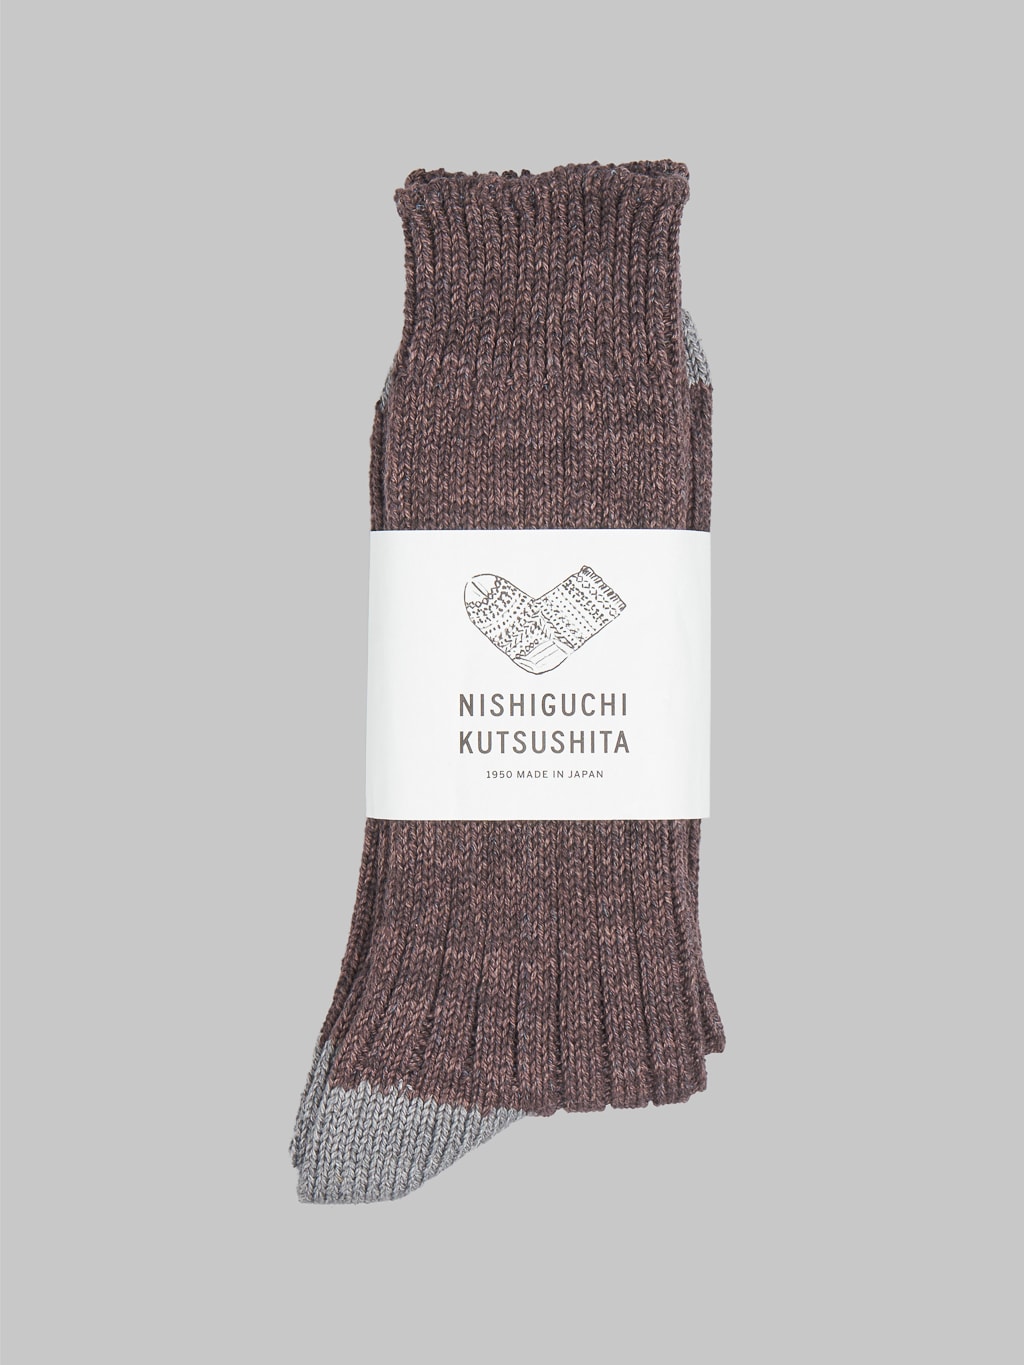 Nishiguchi Kutsushita Recycled Cotton Ribbed Socks Brown Japan Made